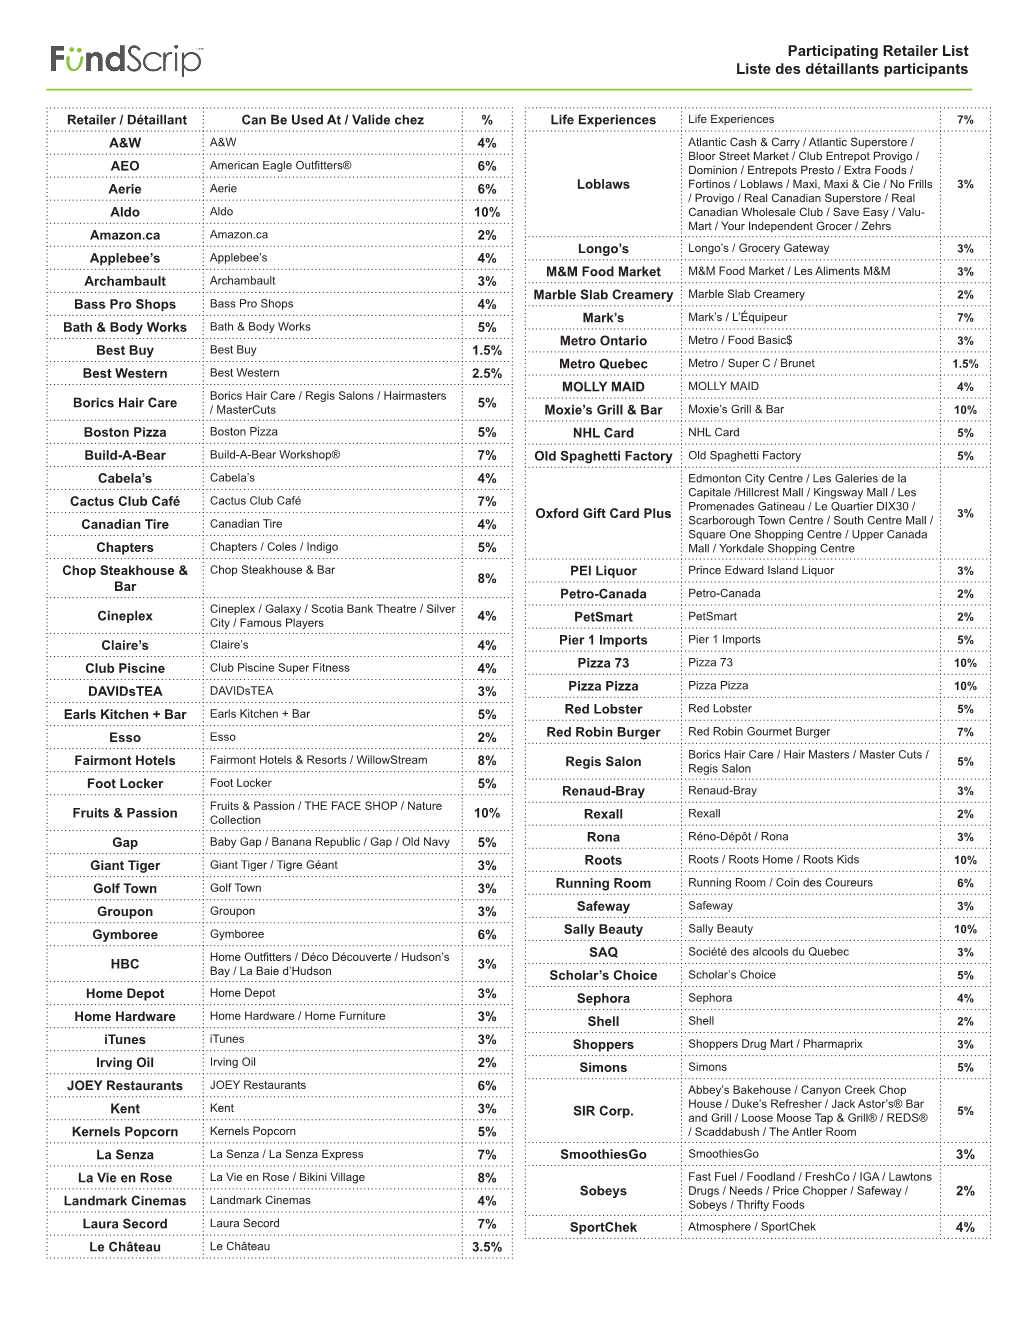 List of Retailers